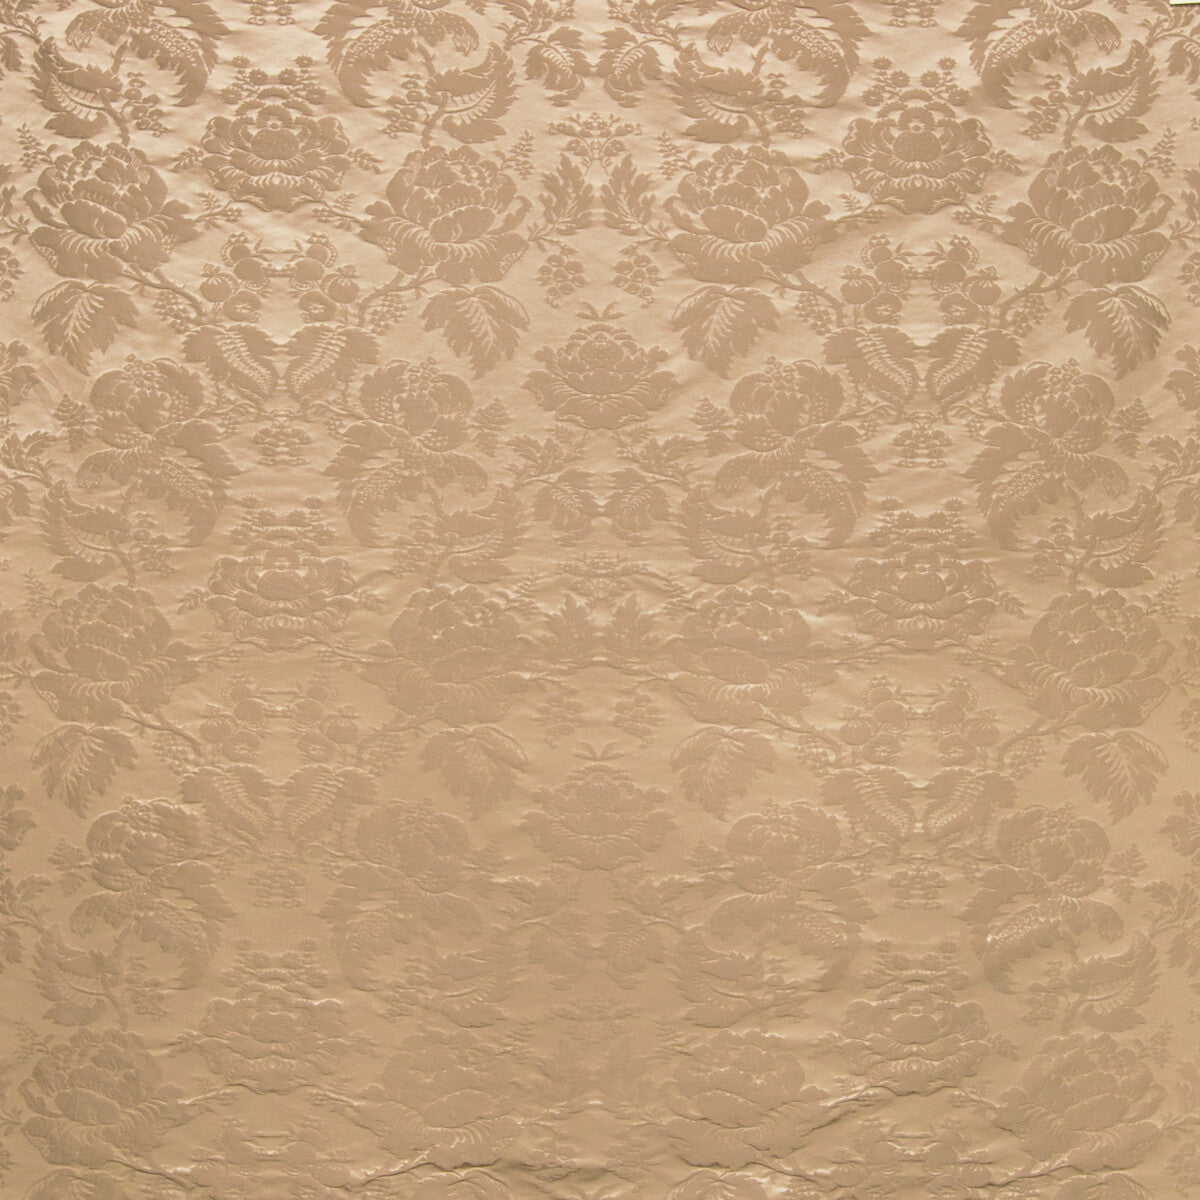 Moulins Damask fabric in allspice color - pattern BR-81035.68.0 - by Brunschwig &amp; Fils